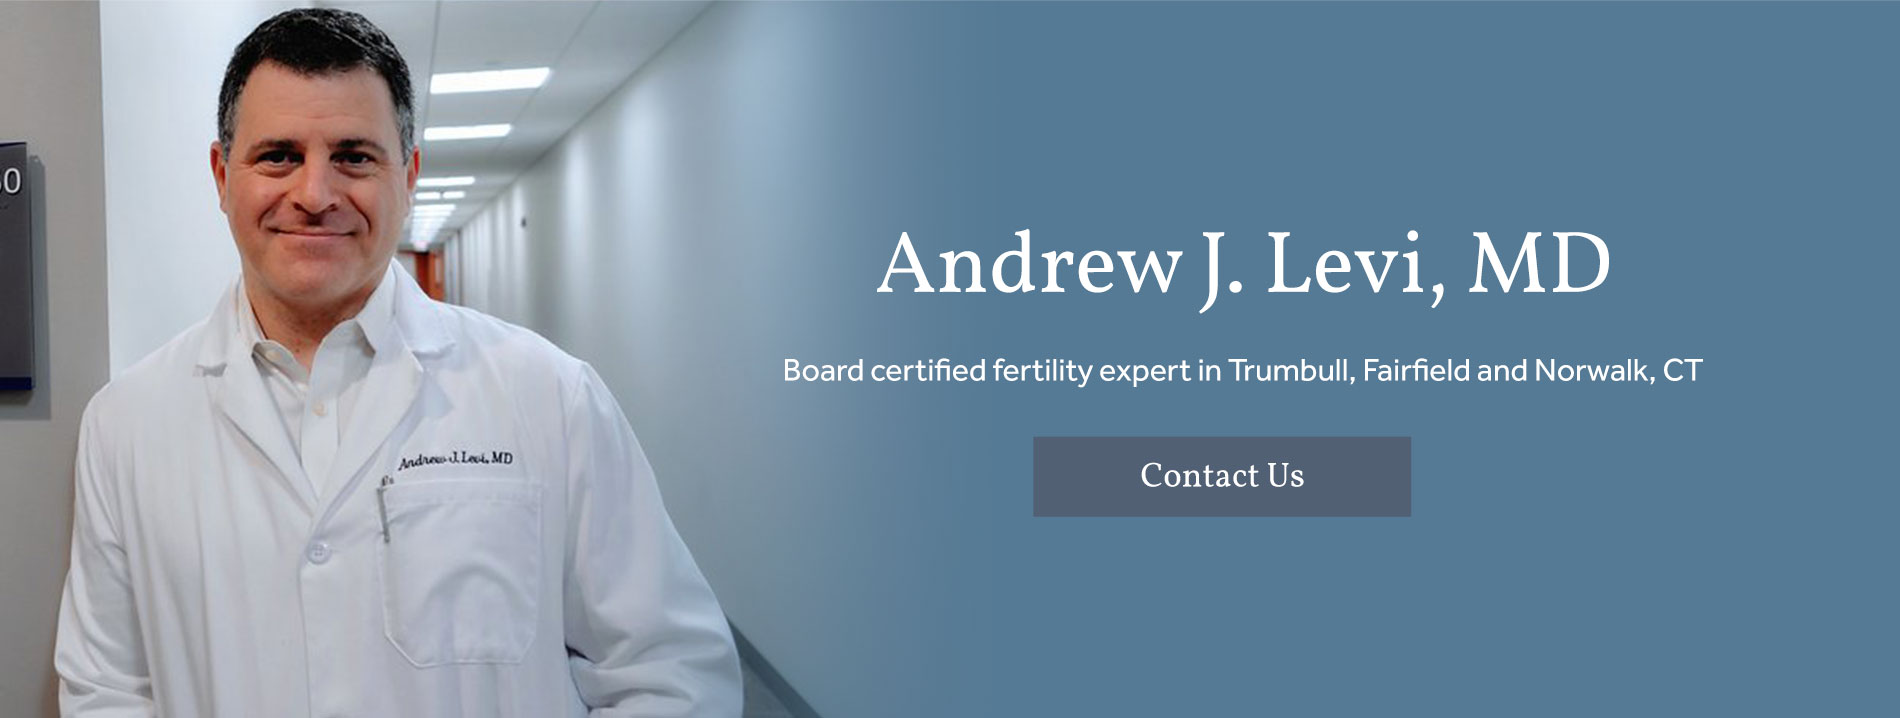 Andrew J. Levi, MD - Board certified fertility expert in Trumbull, Fairfield and Norwalk, CT